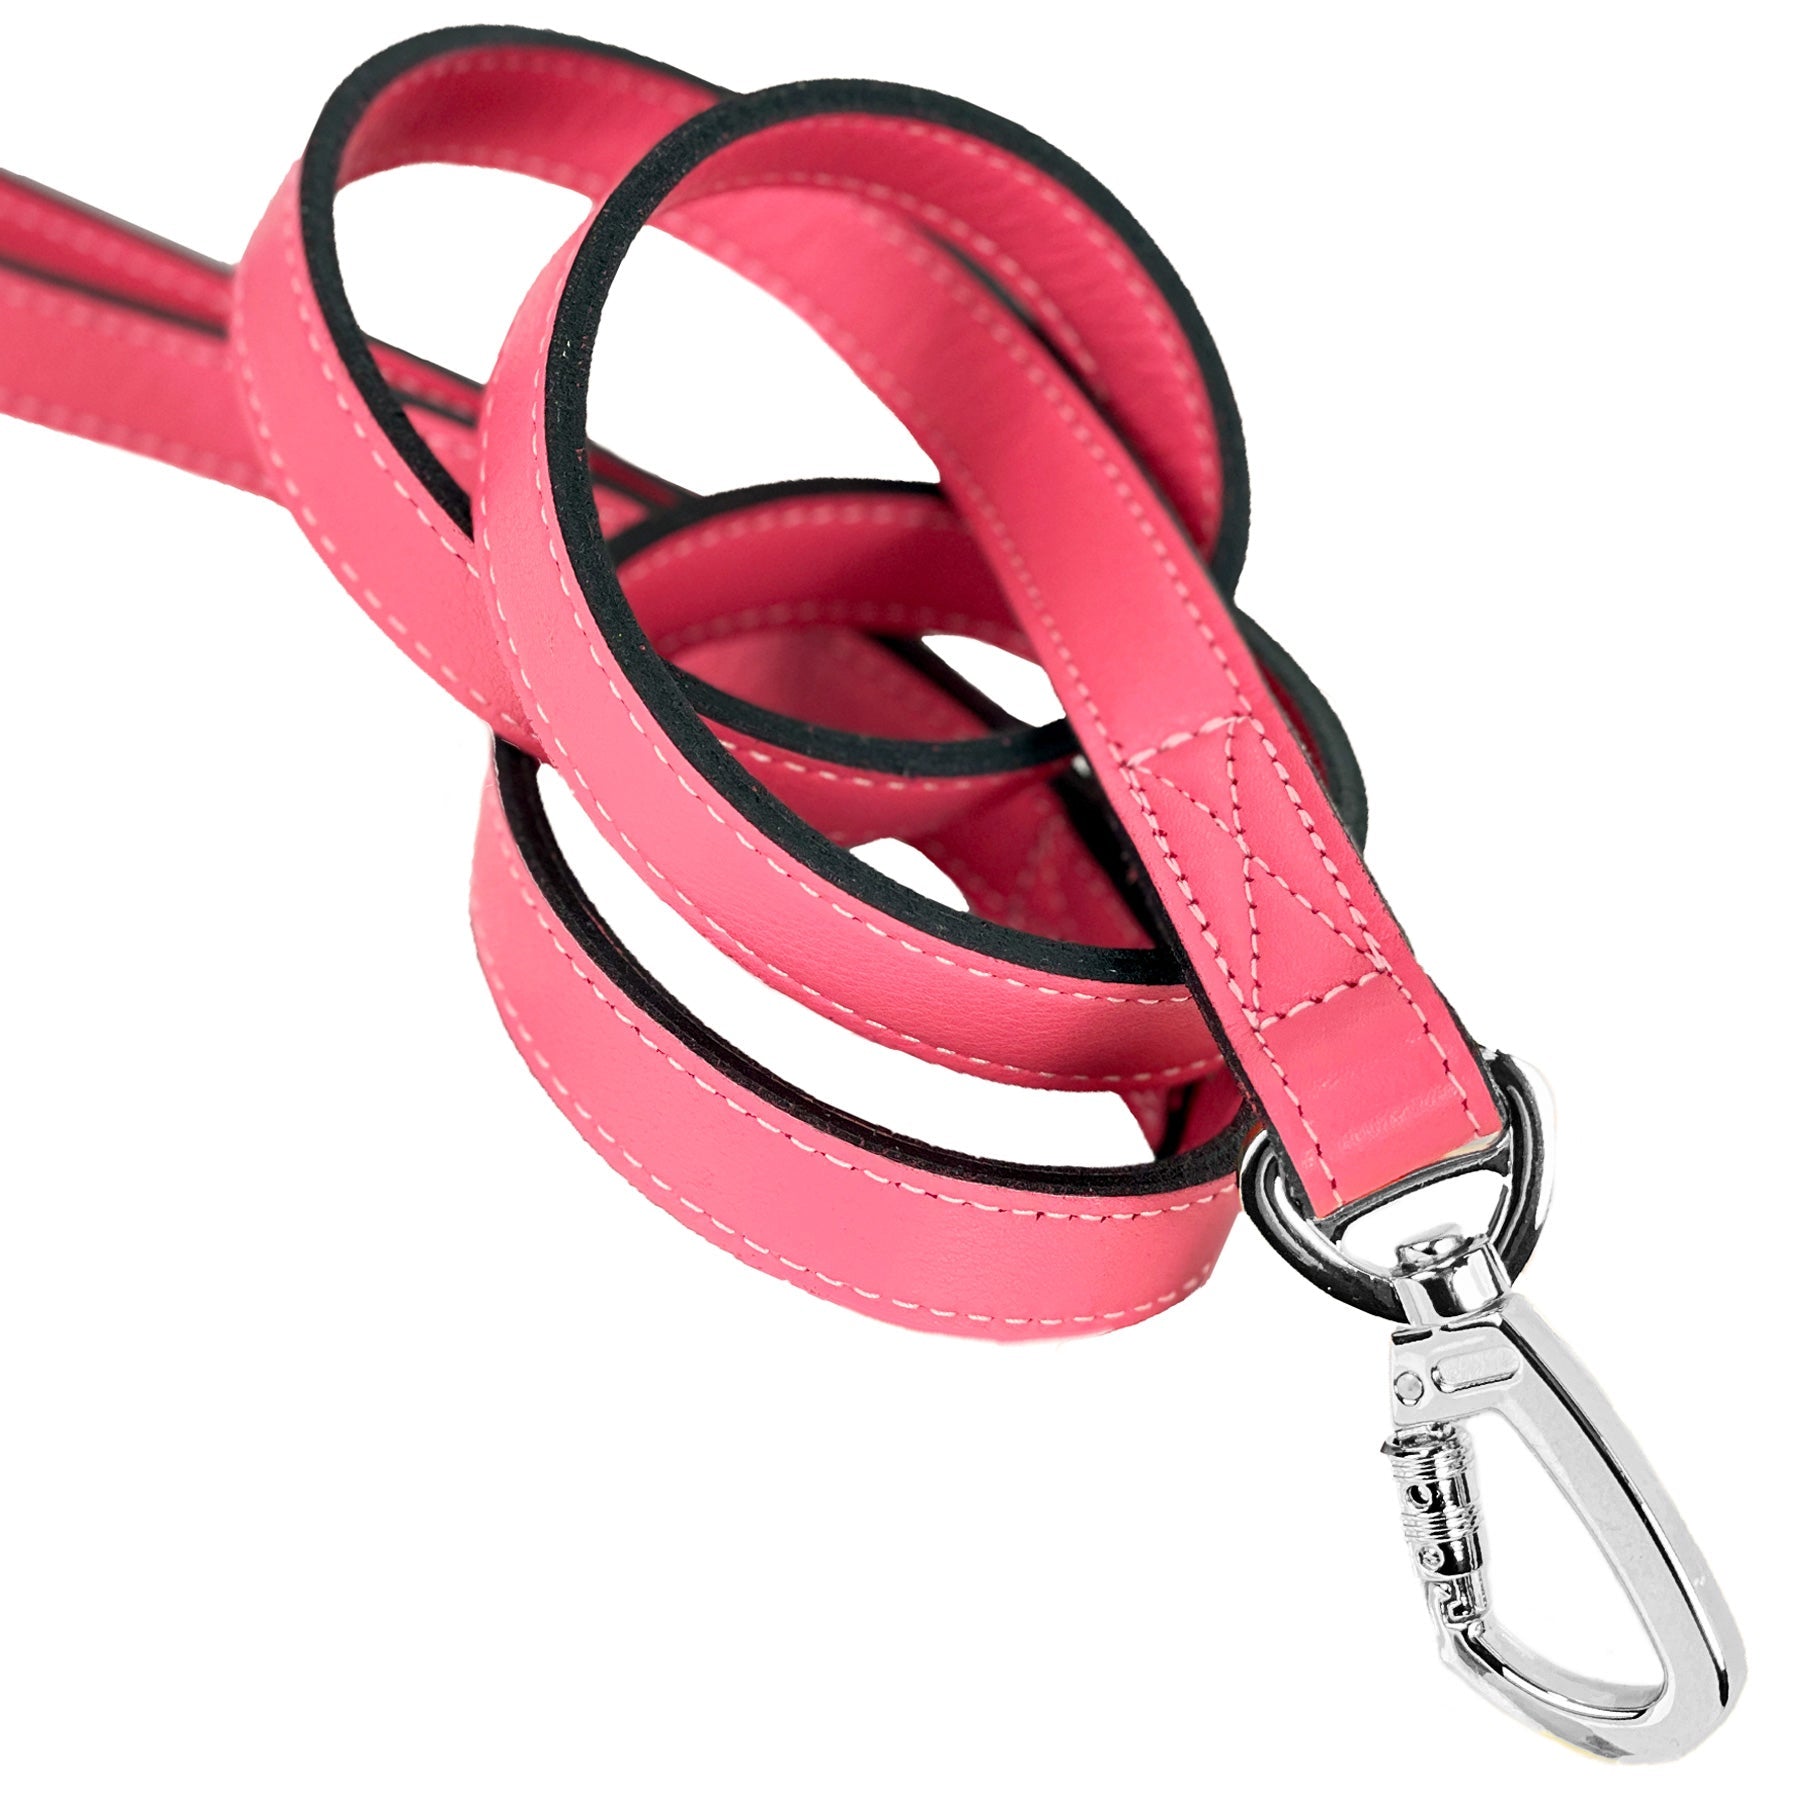 Georgia Rose Dog Leash in Petal Pink & Nickel